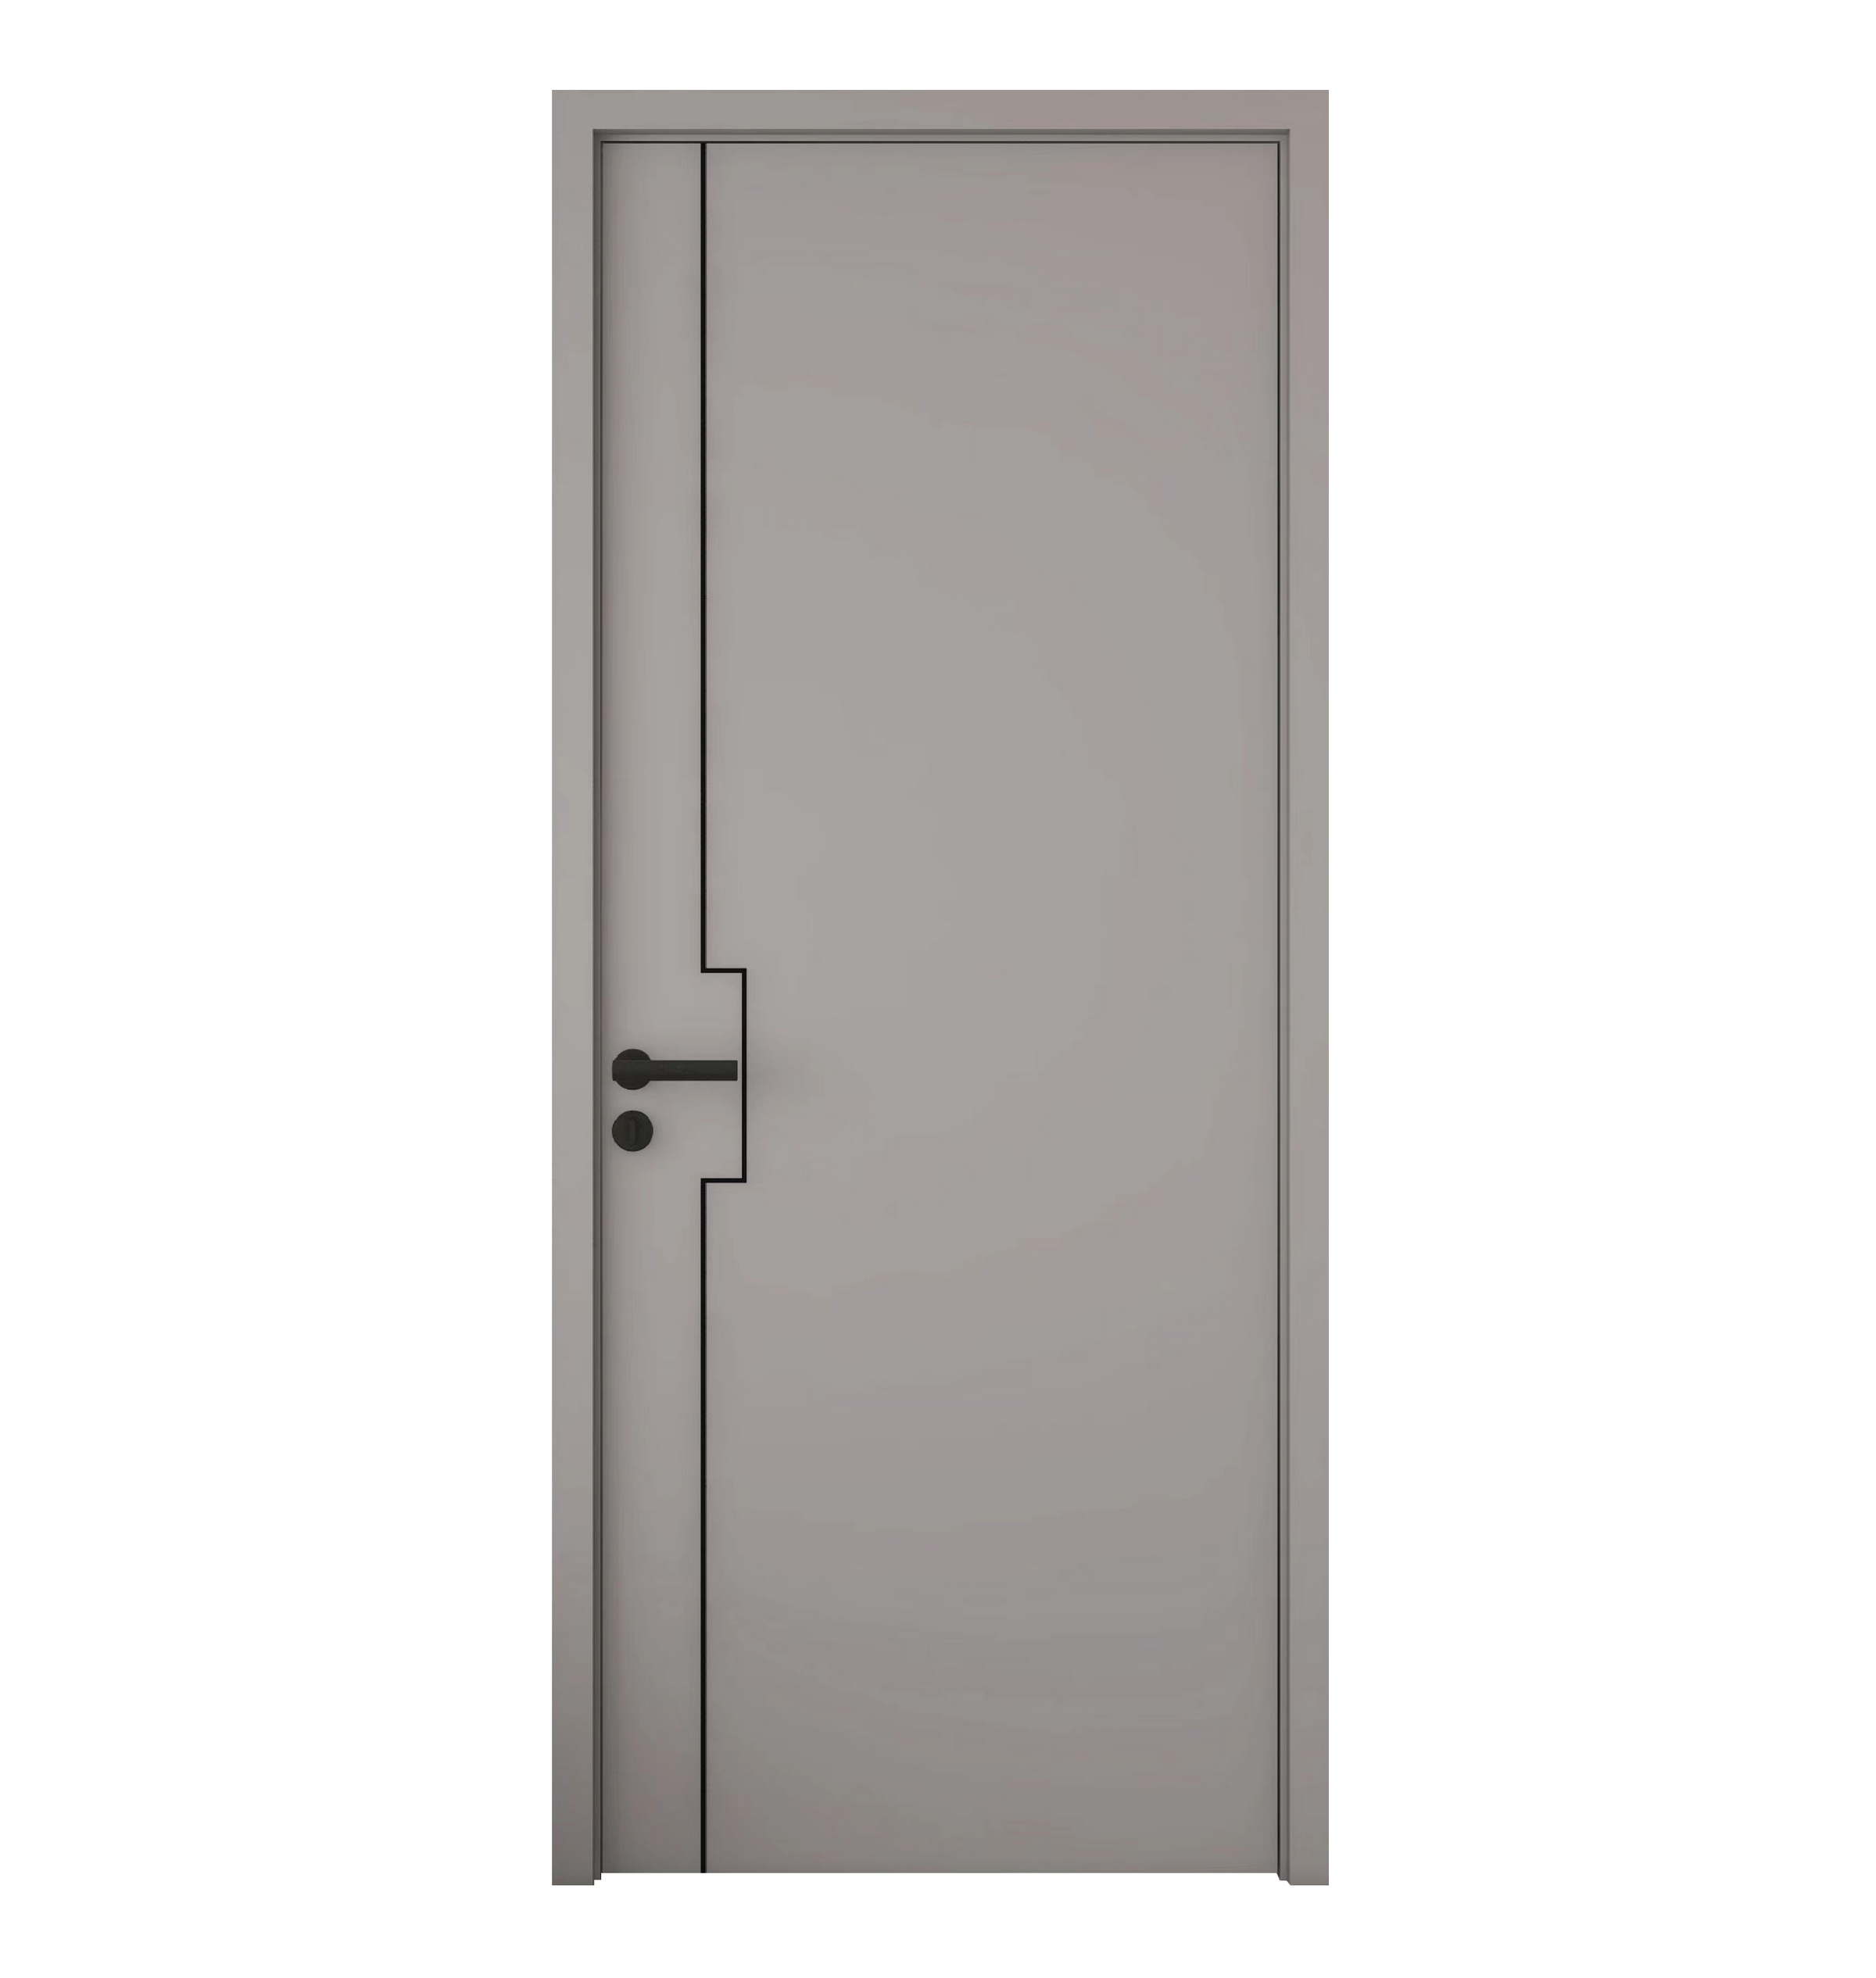 Solid Wooden Door PVC Latest Designs Pictures Panel Interior Room MDF Main Doors for Houses For Bedroom 